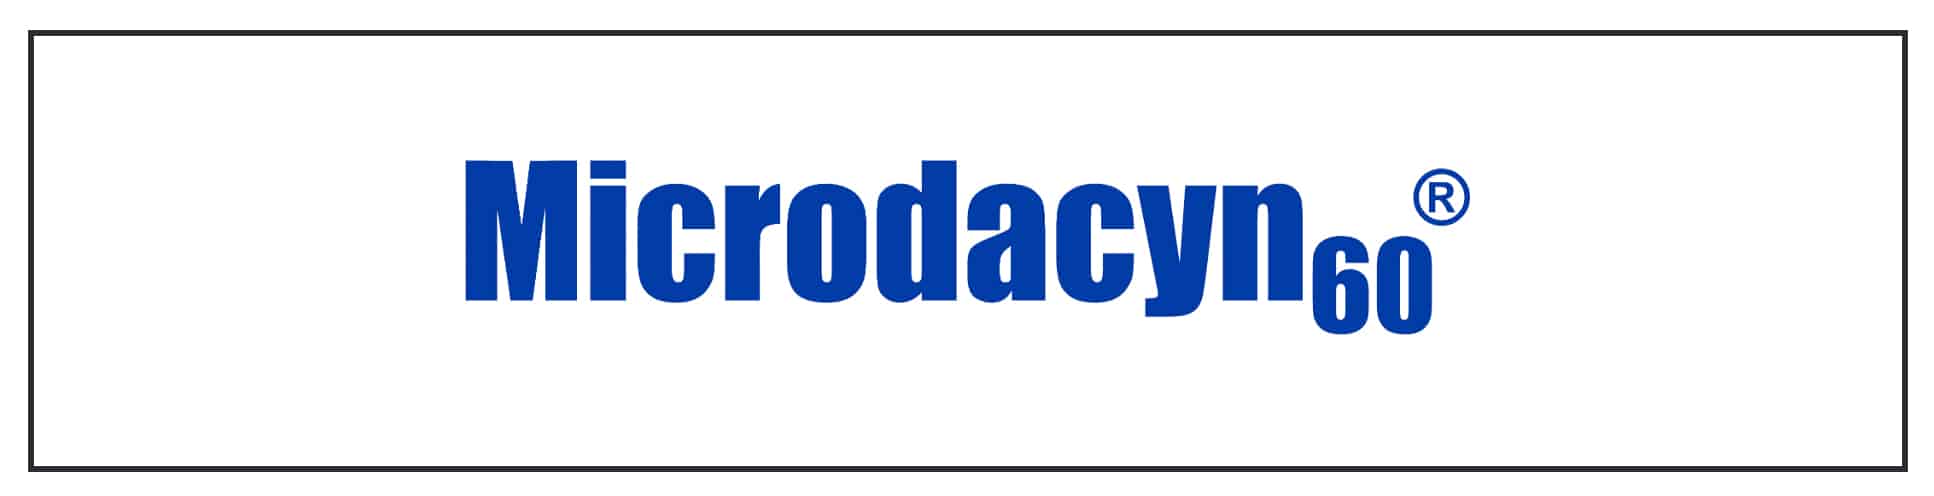 The logo for microadyn go.